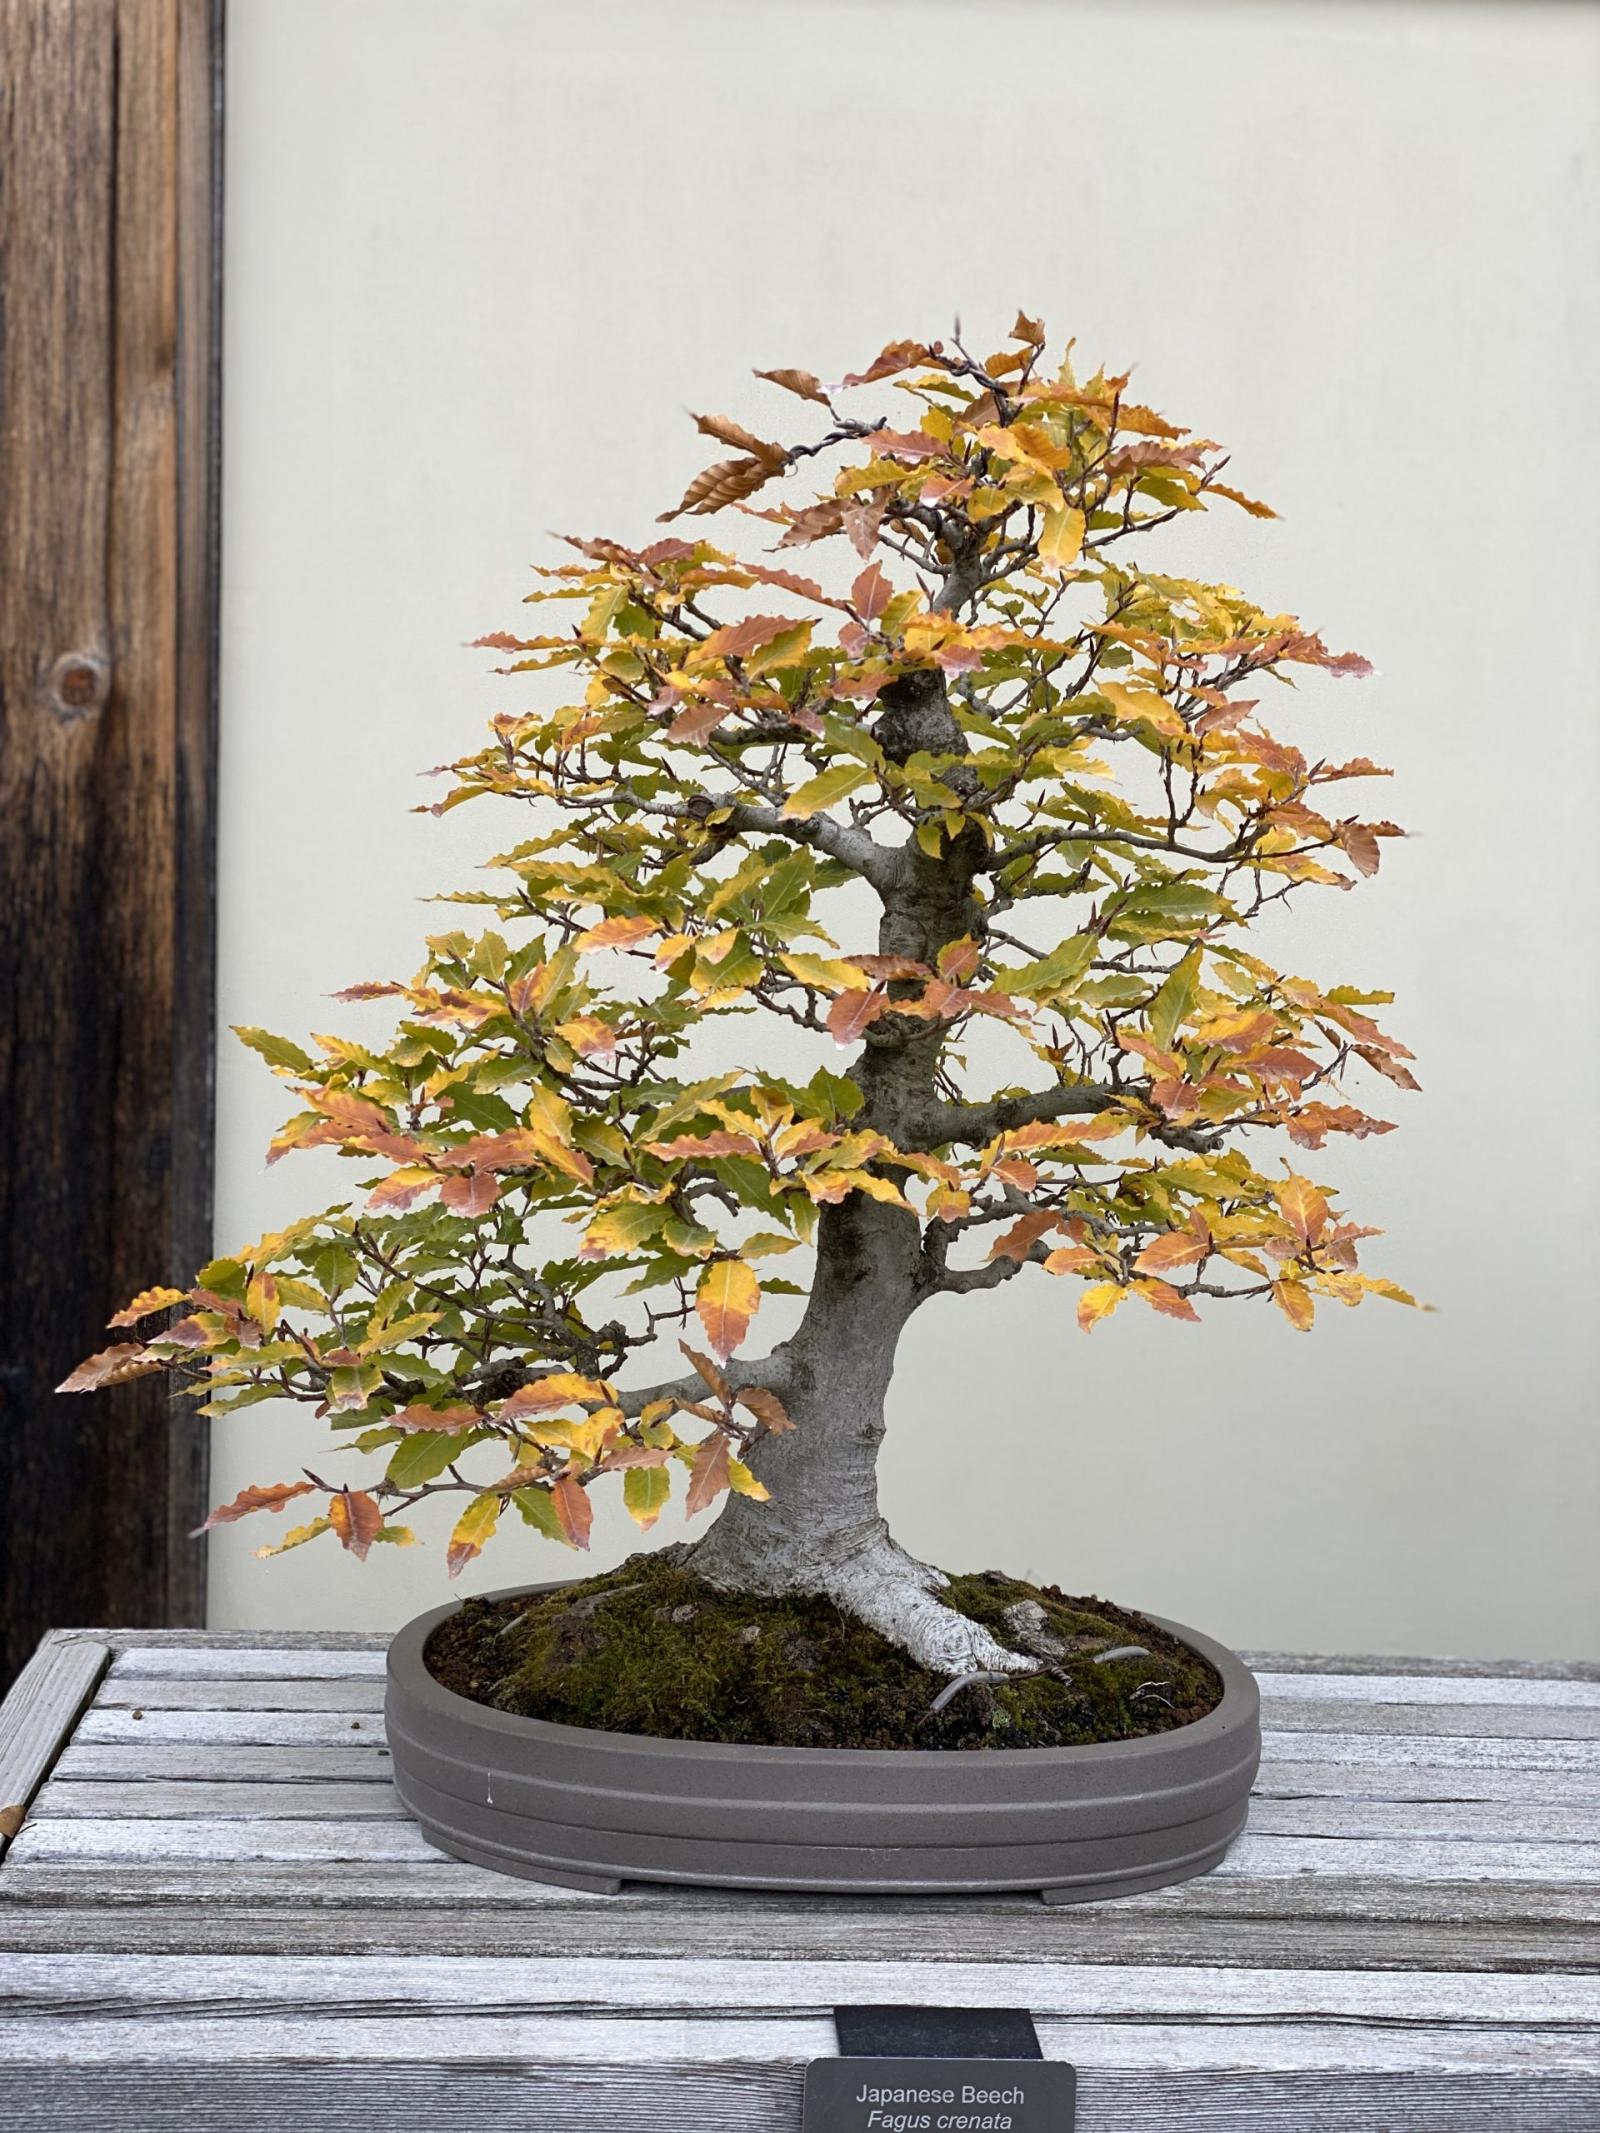 Japanese Beech bonsai tree